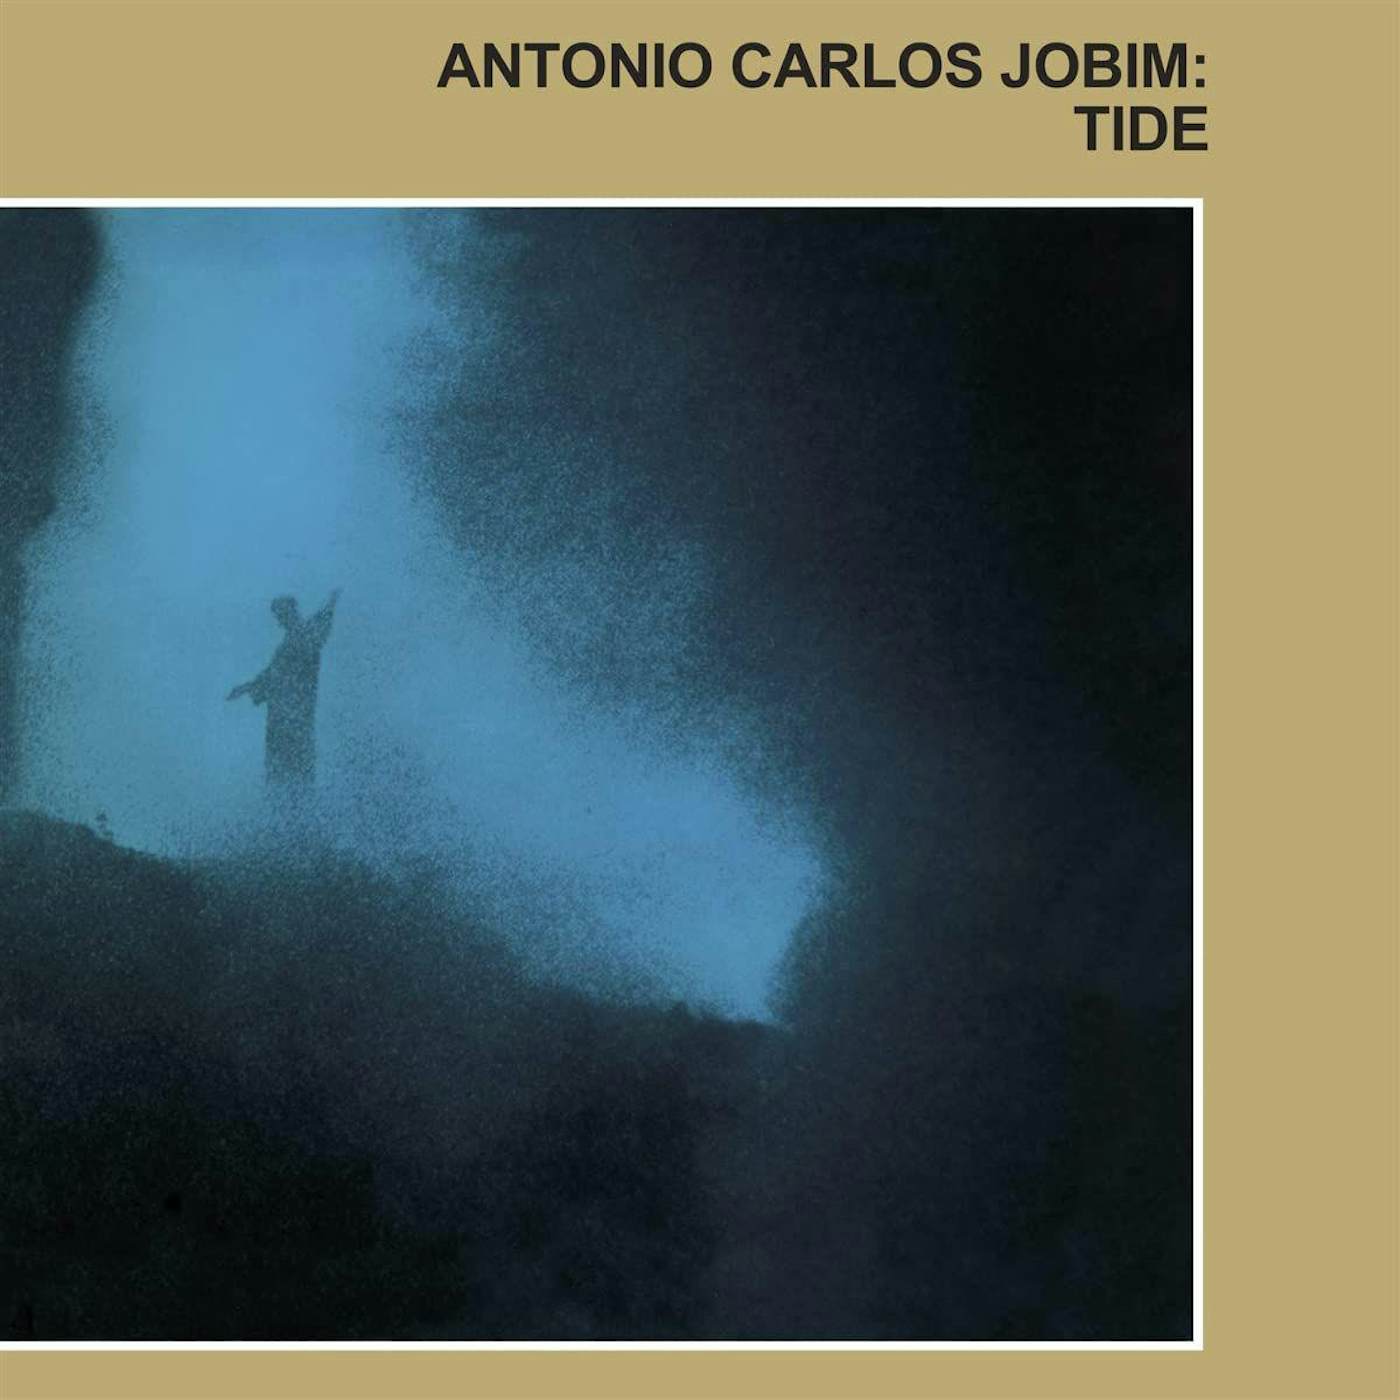 Antônio Carlos Jobim Tide Vinyl Record